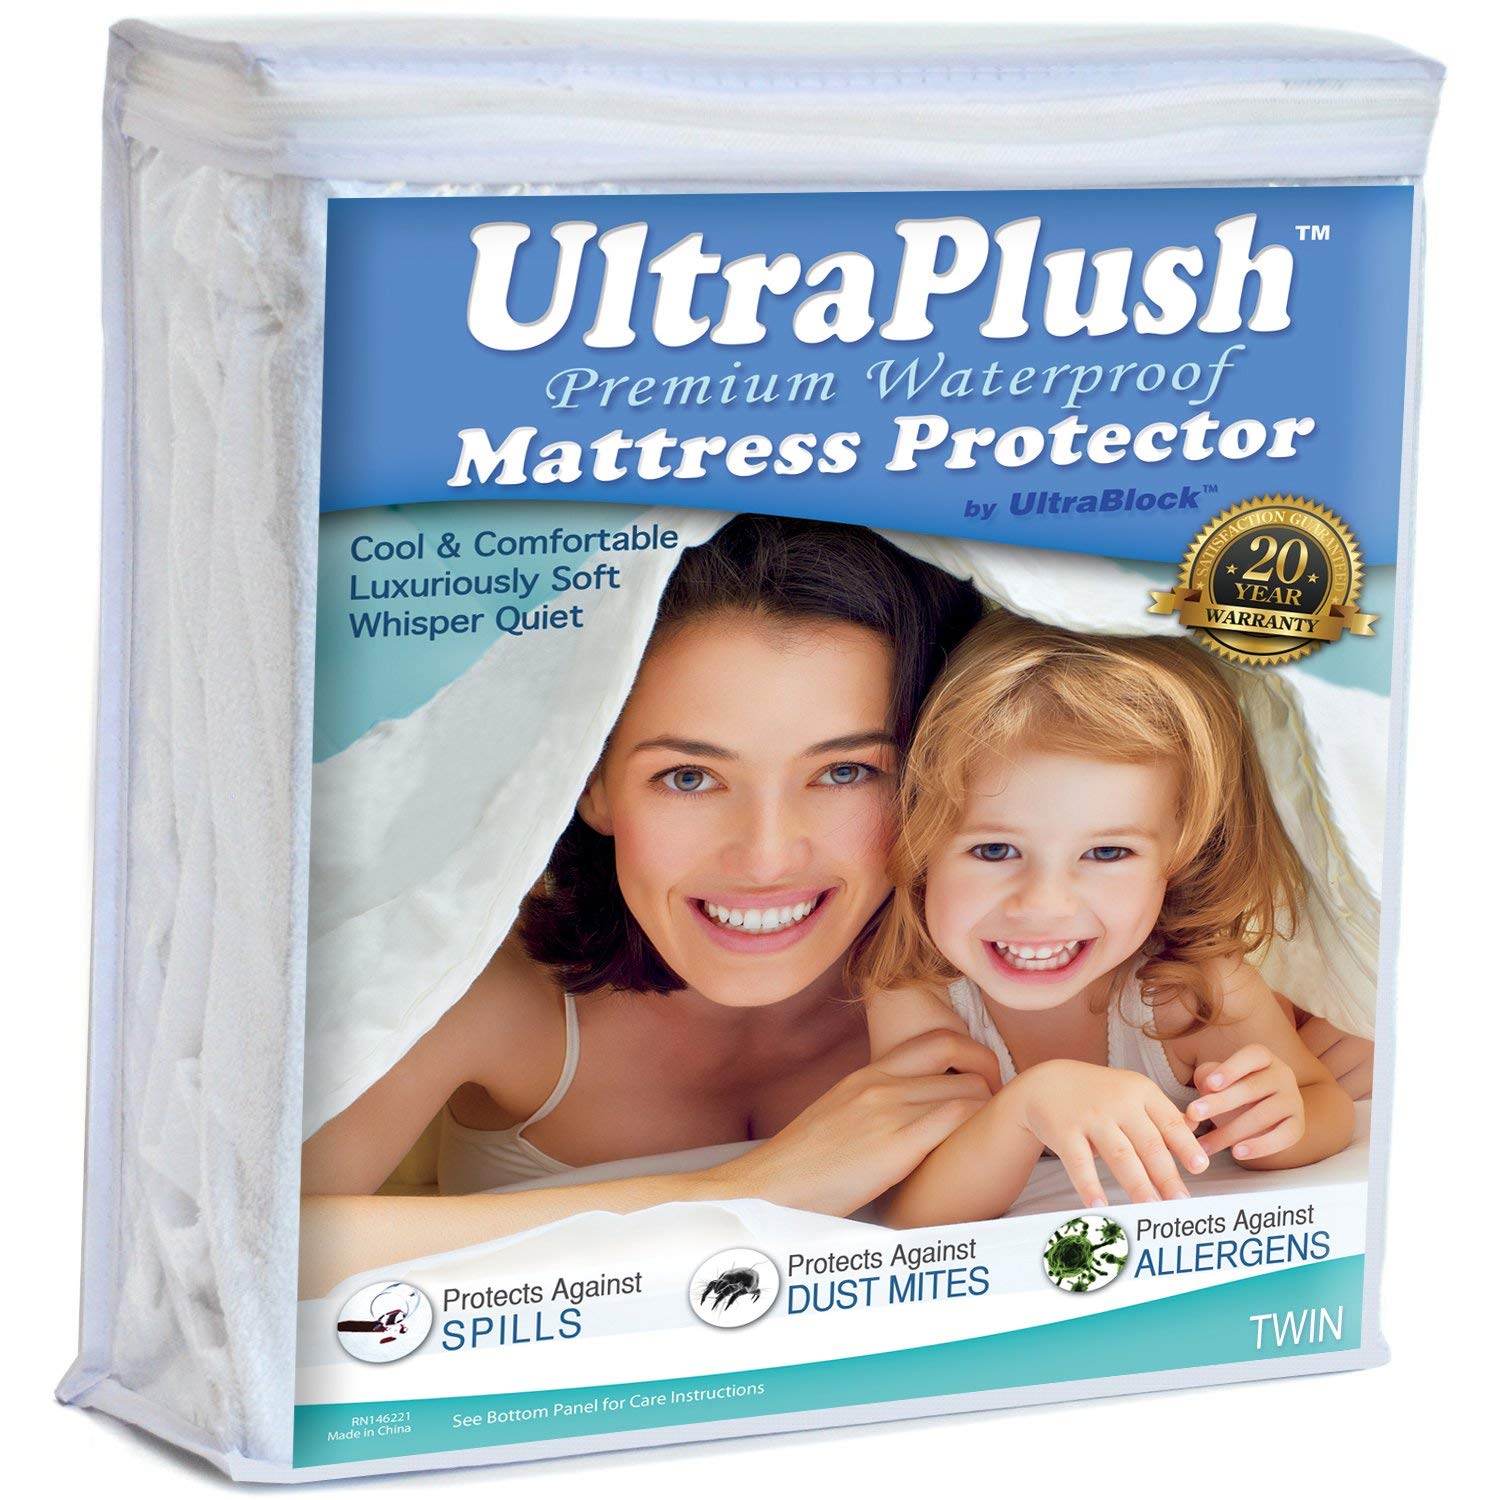  Ultra Plush Premium Waterproof Mattress Protector